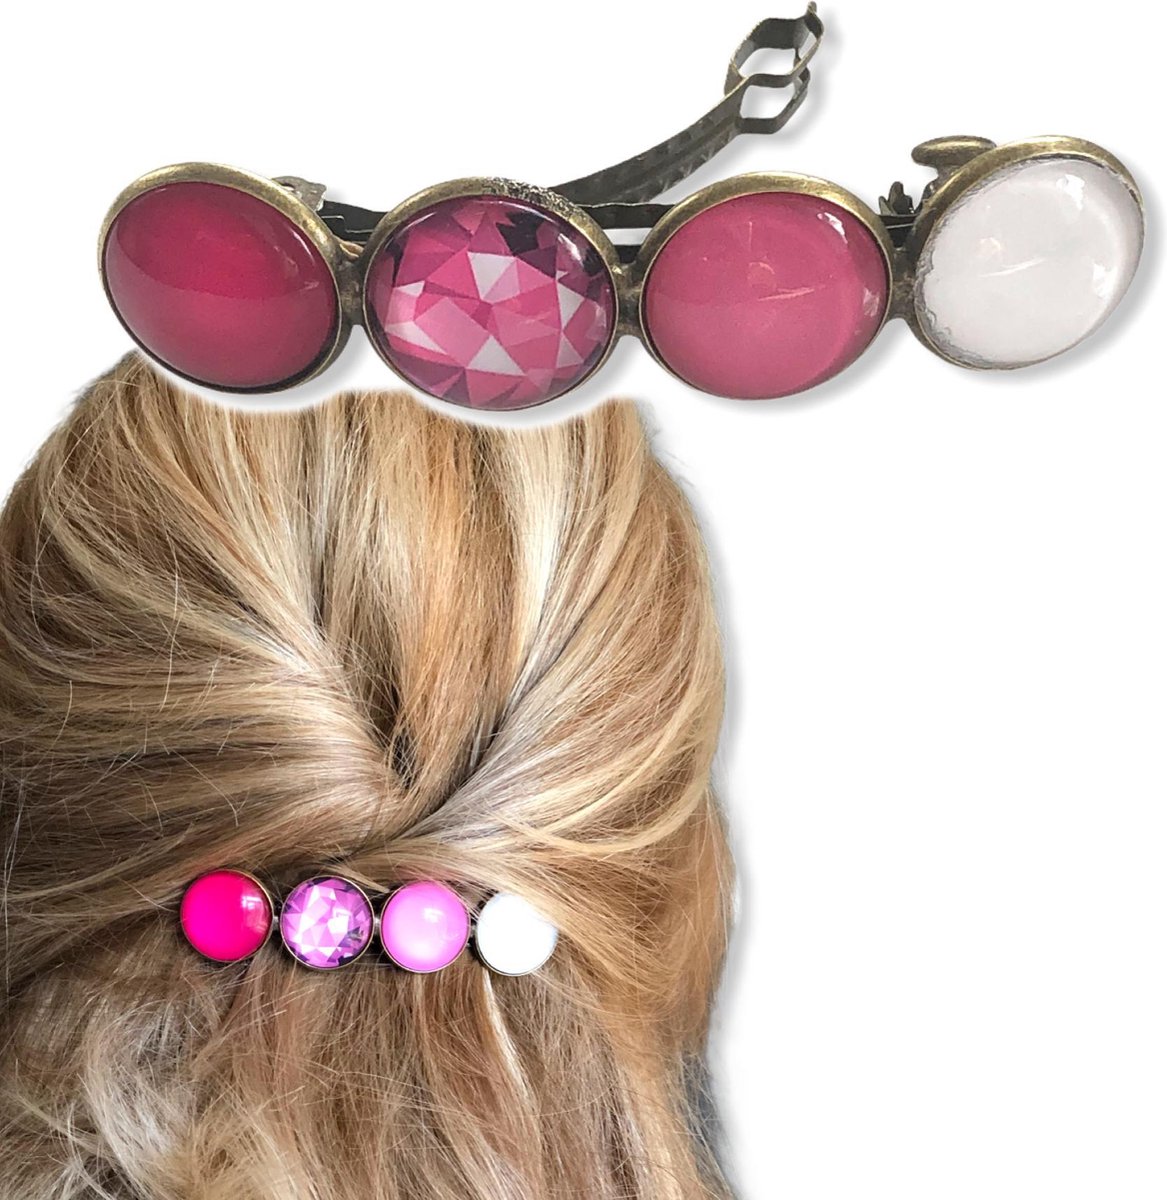 Hairpin-Haarspeld-Haaraccessoire-Hairclip-Cabochon-Roze-Handmade-Haarmode